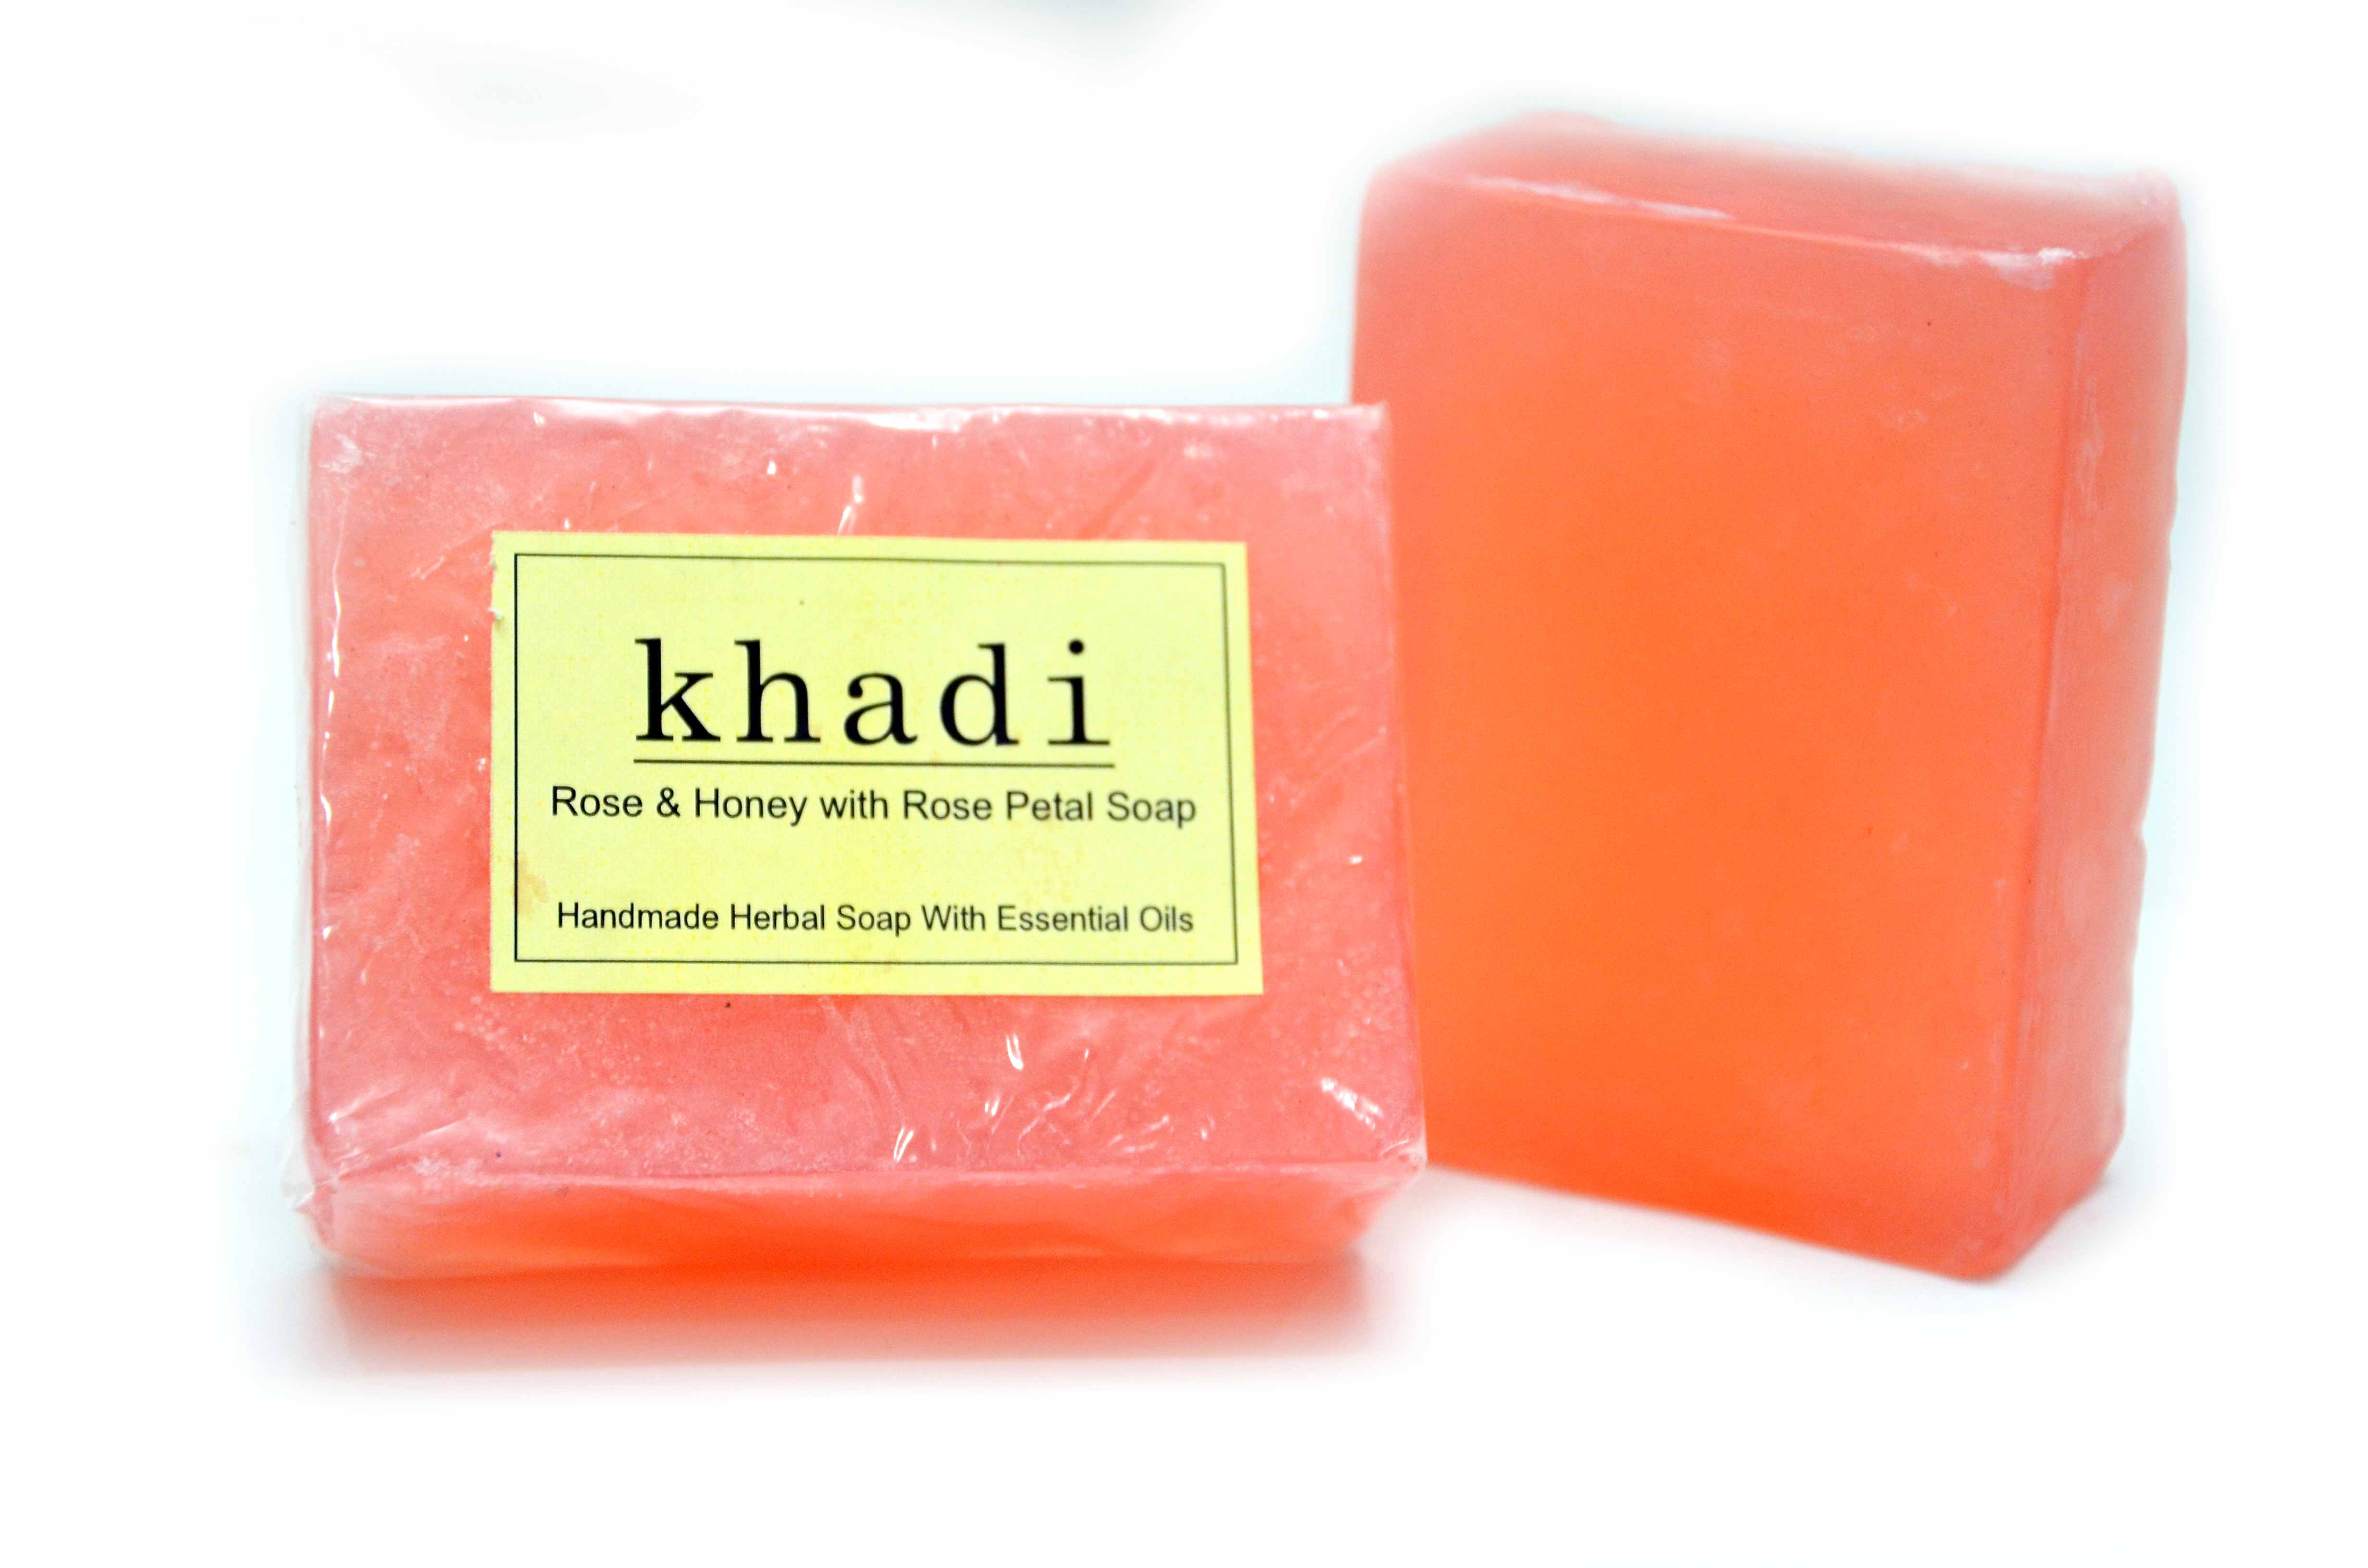 Buy Vagad's Khadi Rose And Honey With Rose Petal Soap at Best Price Online